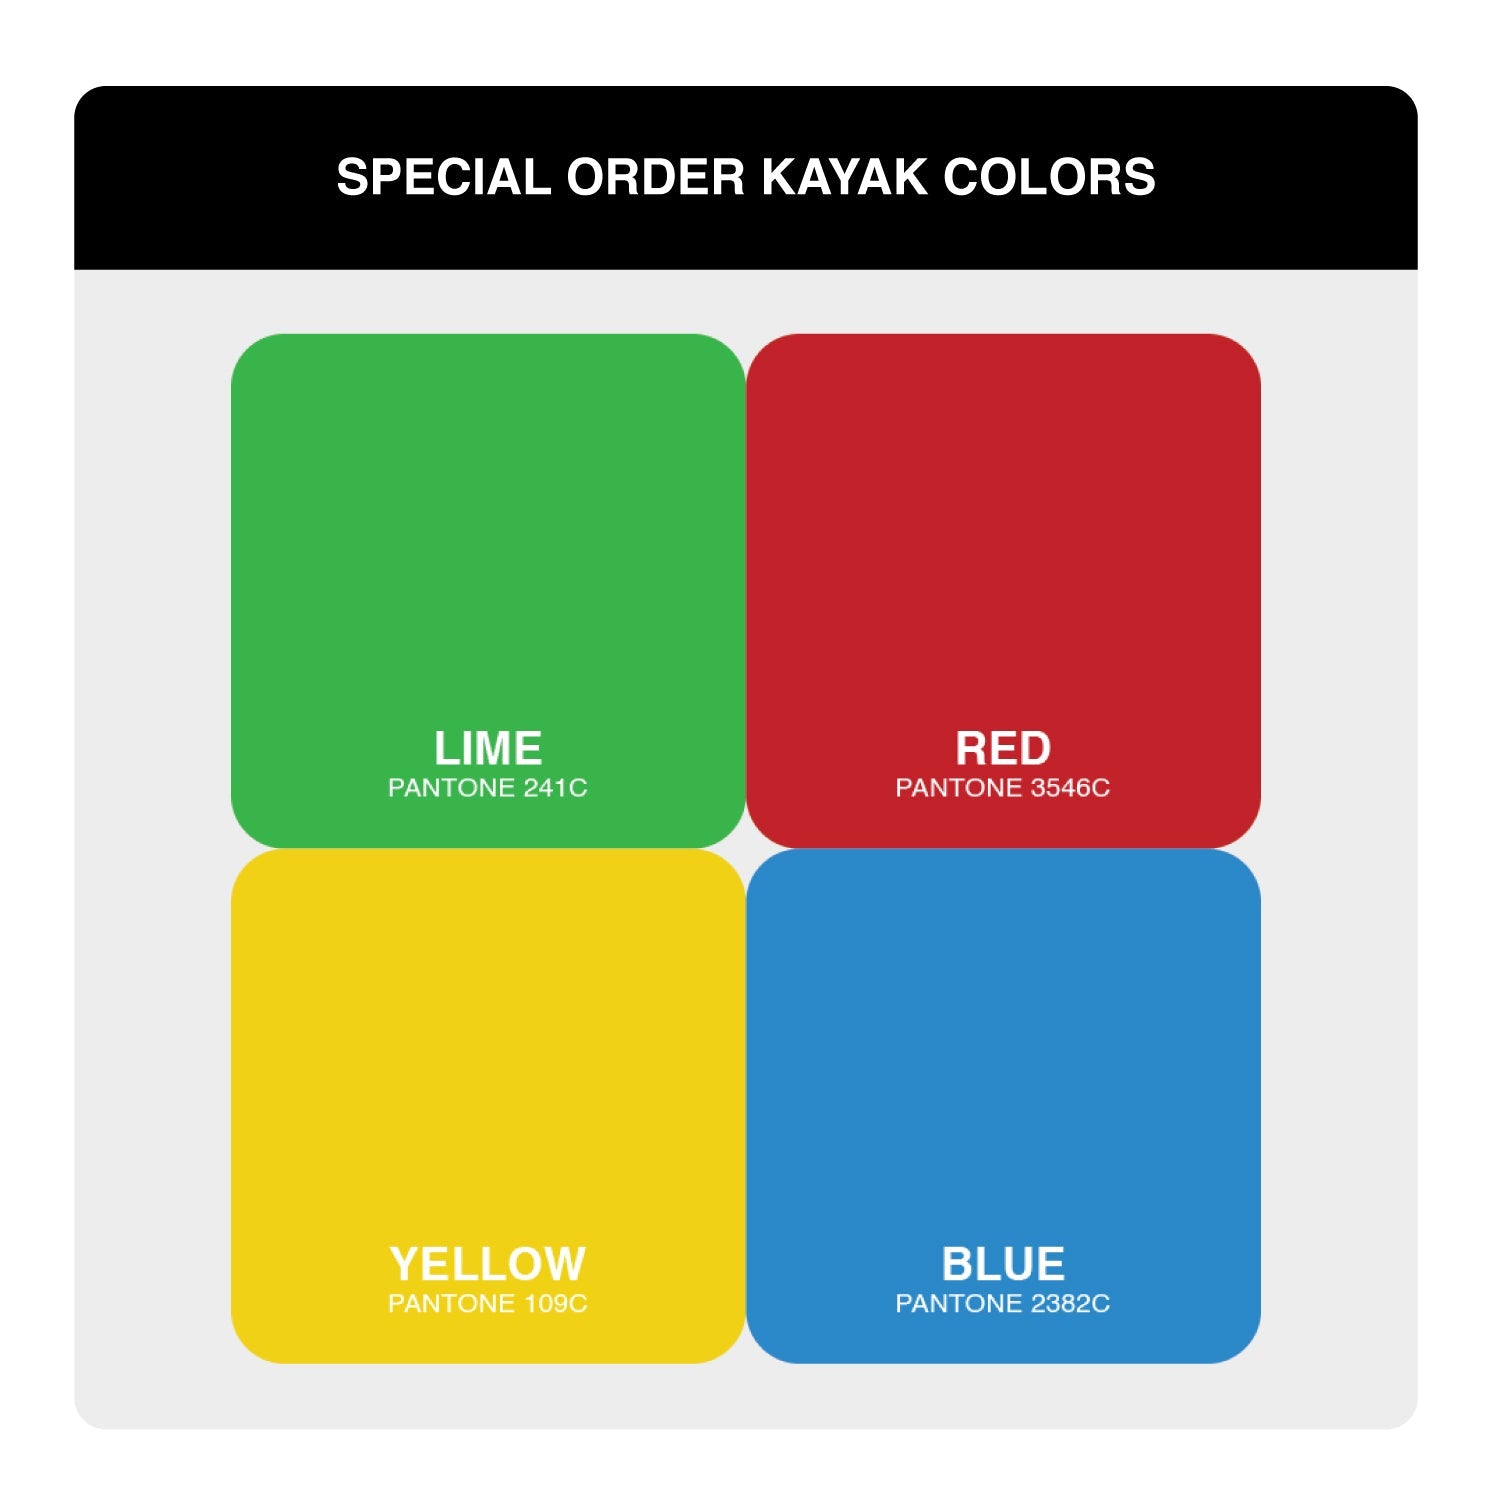 Special Order Kayak Colors